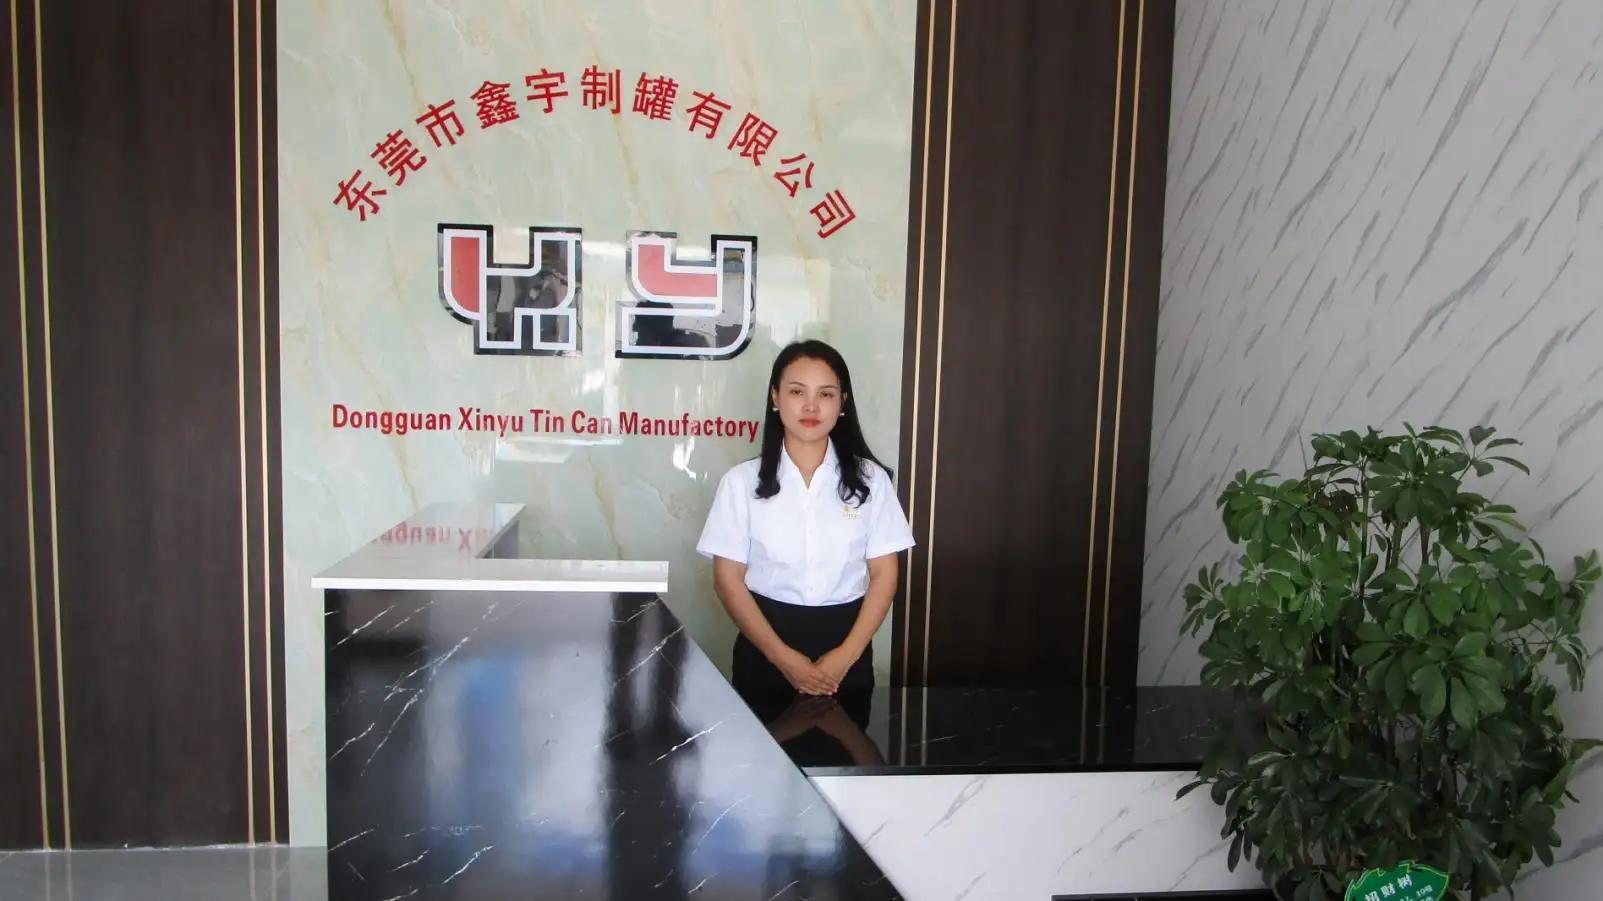 Dongguan City Xinyu Tin Can Manufactory Co., Ltd.